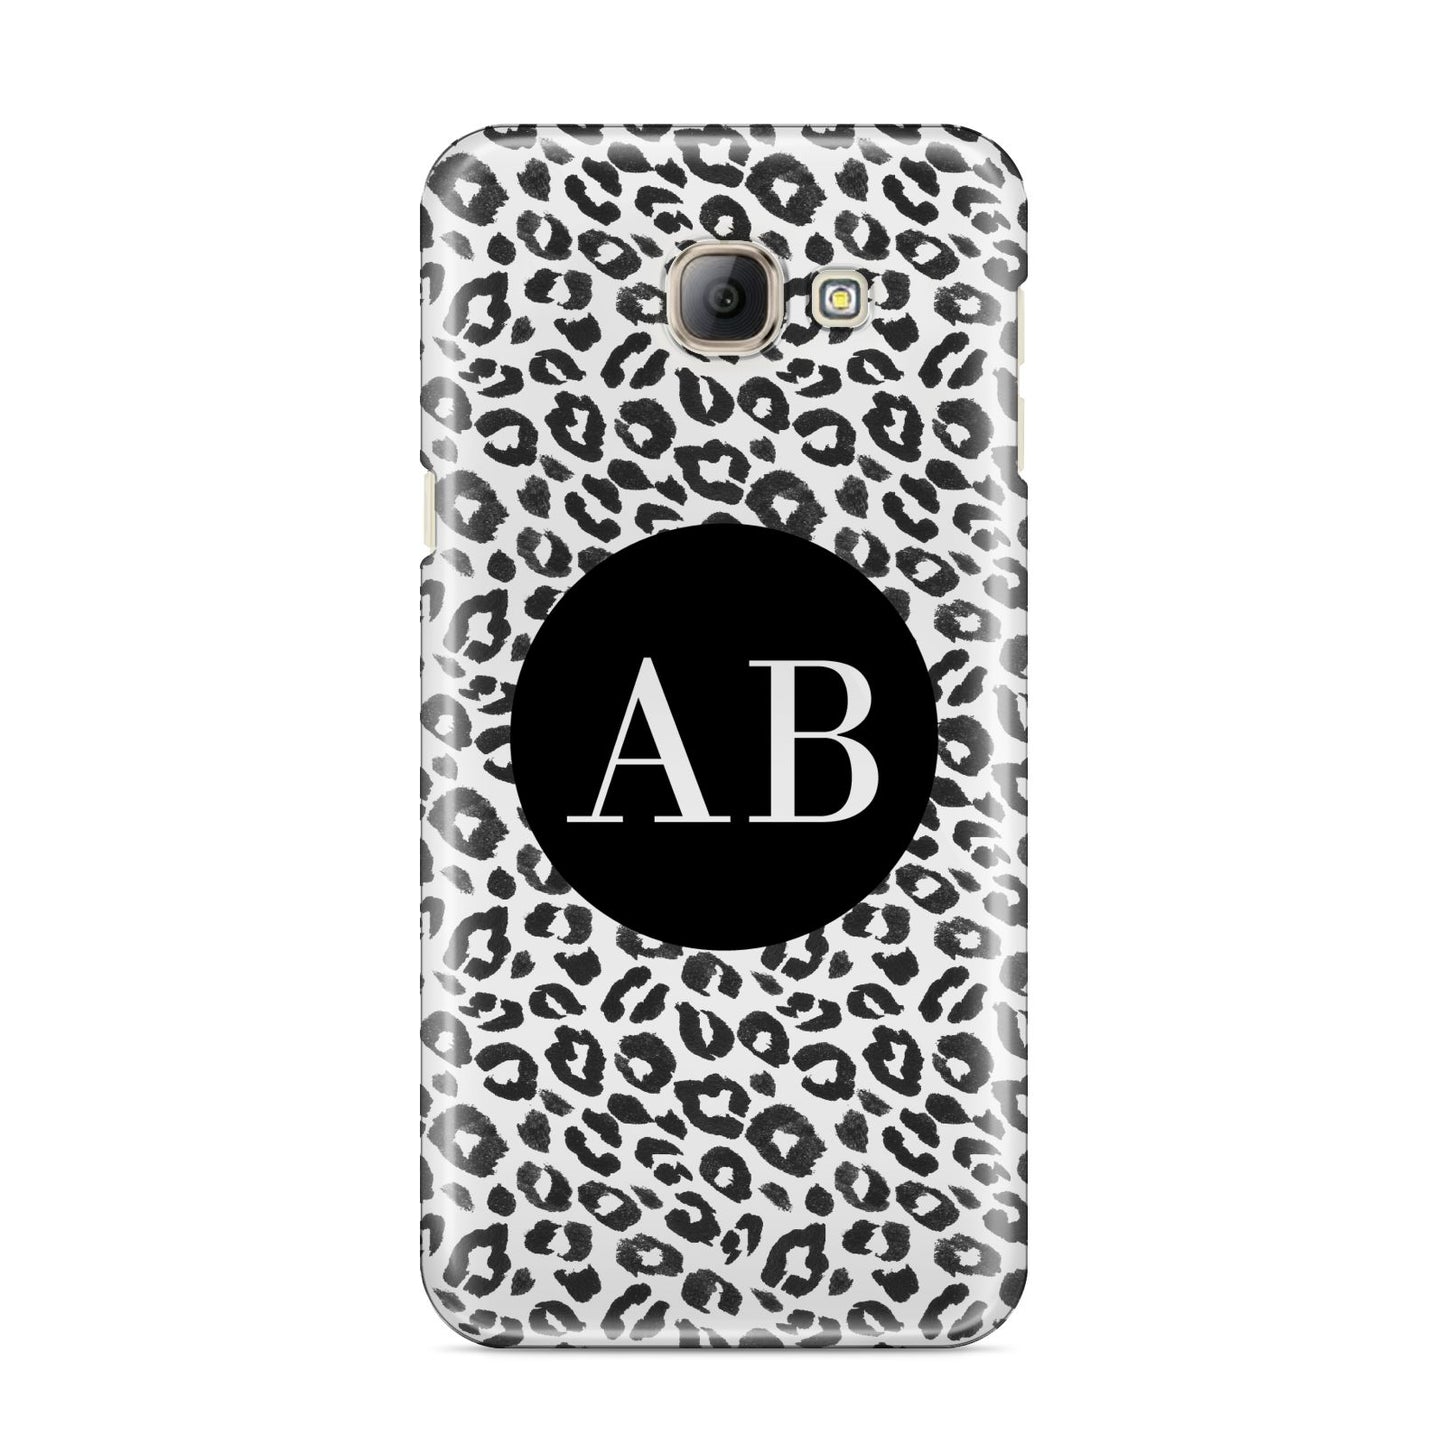 Leopard Print Black and White Samsung Galaxy A8 2016 Case